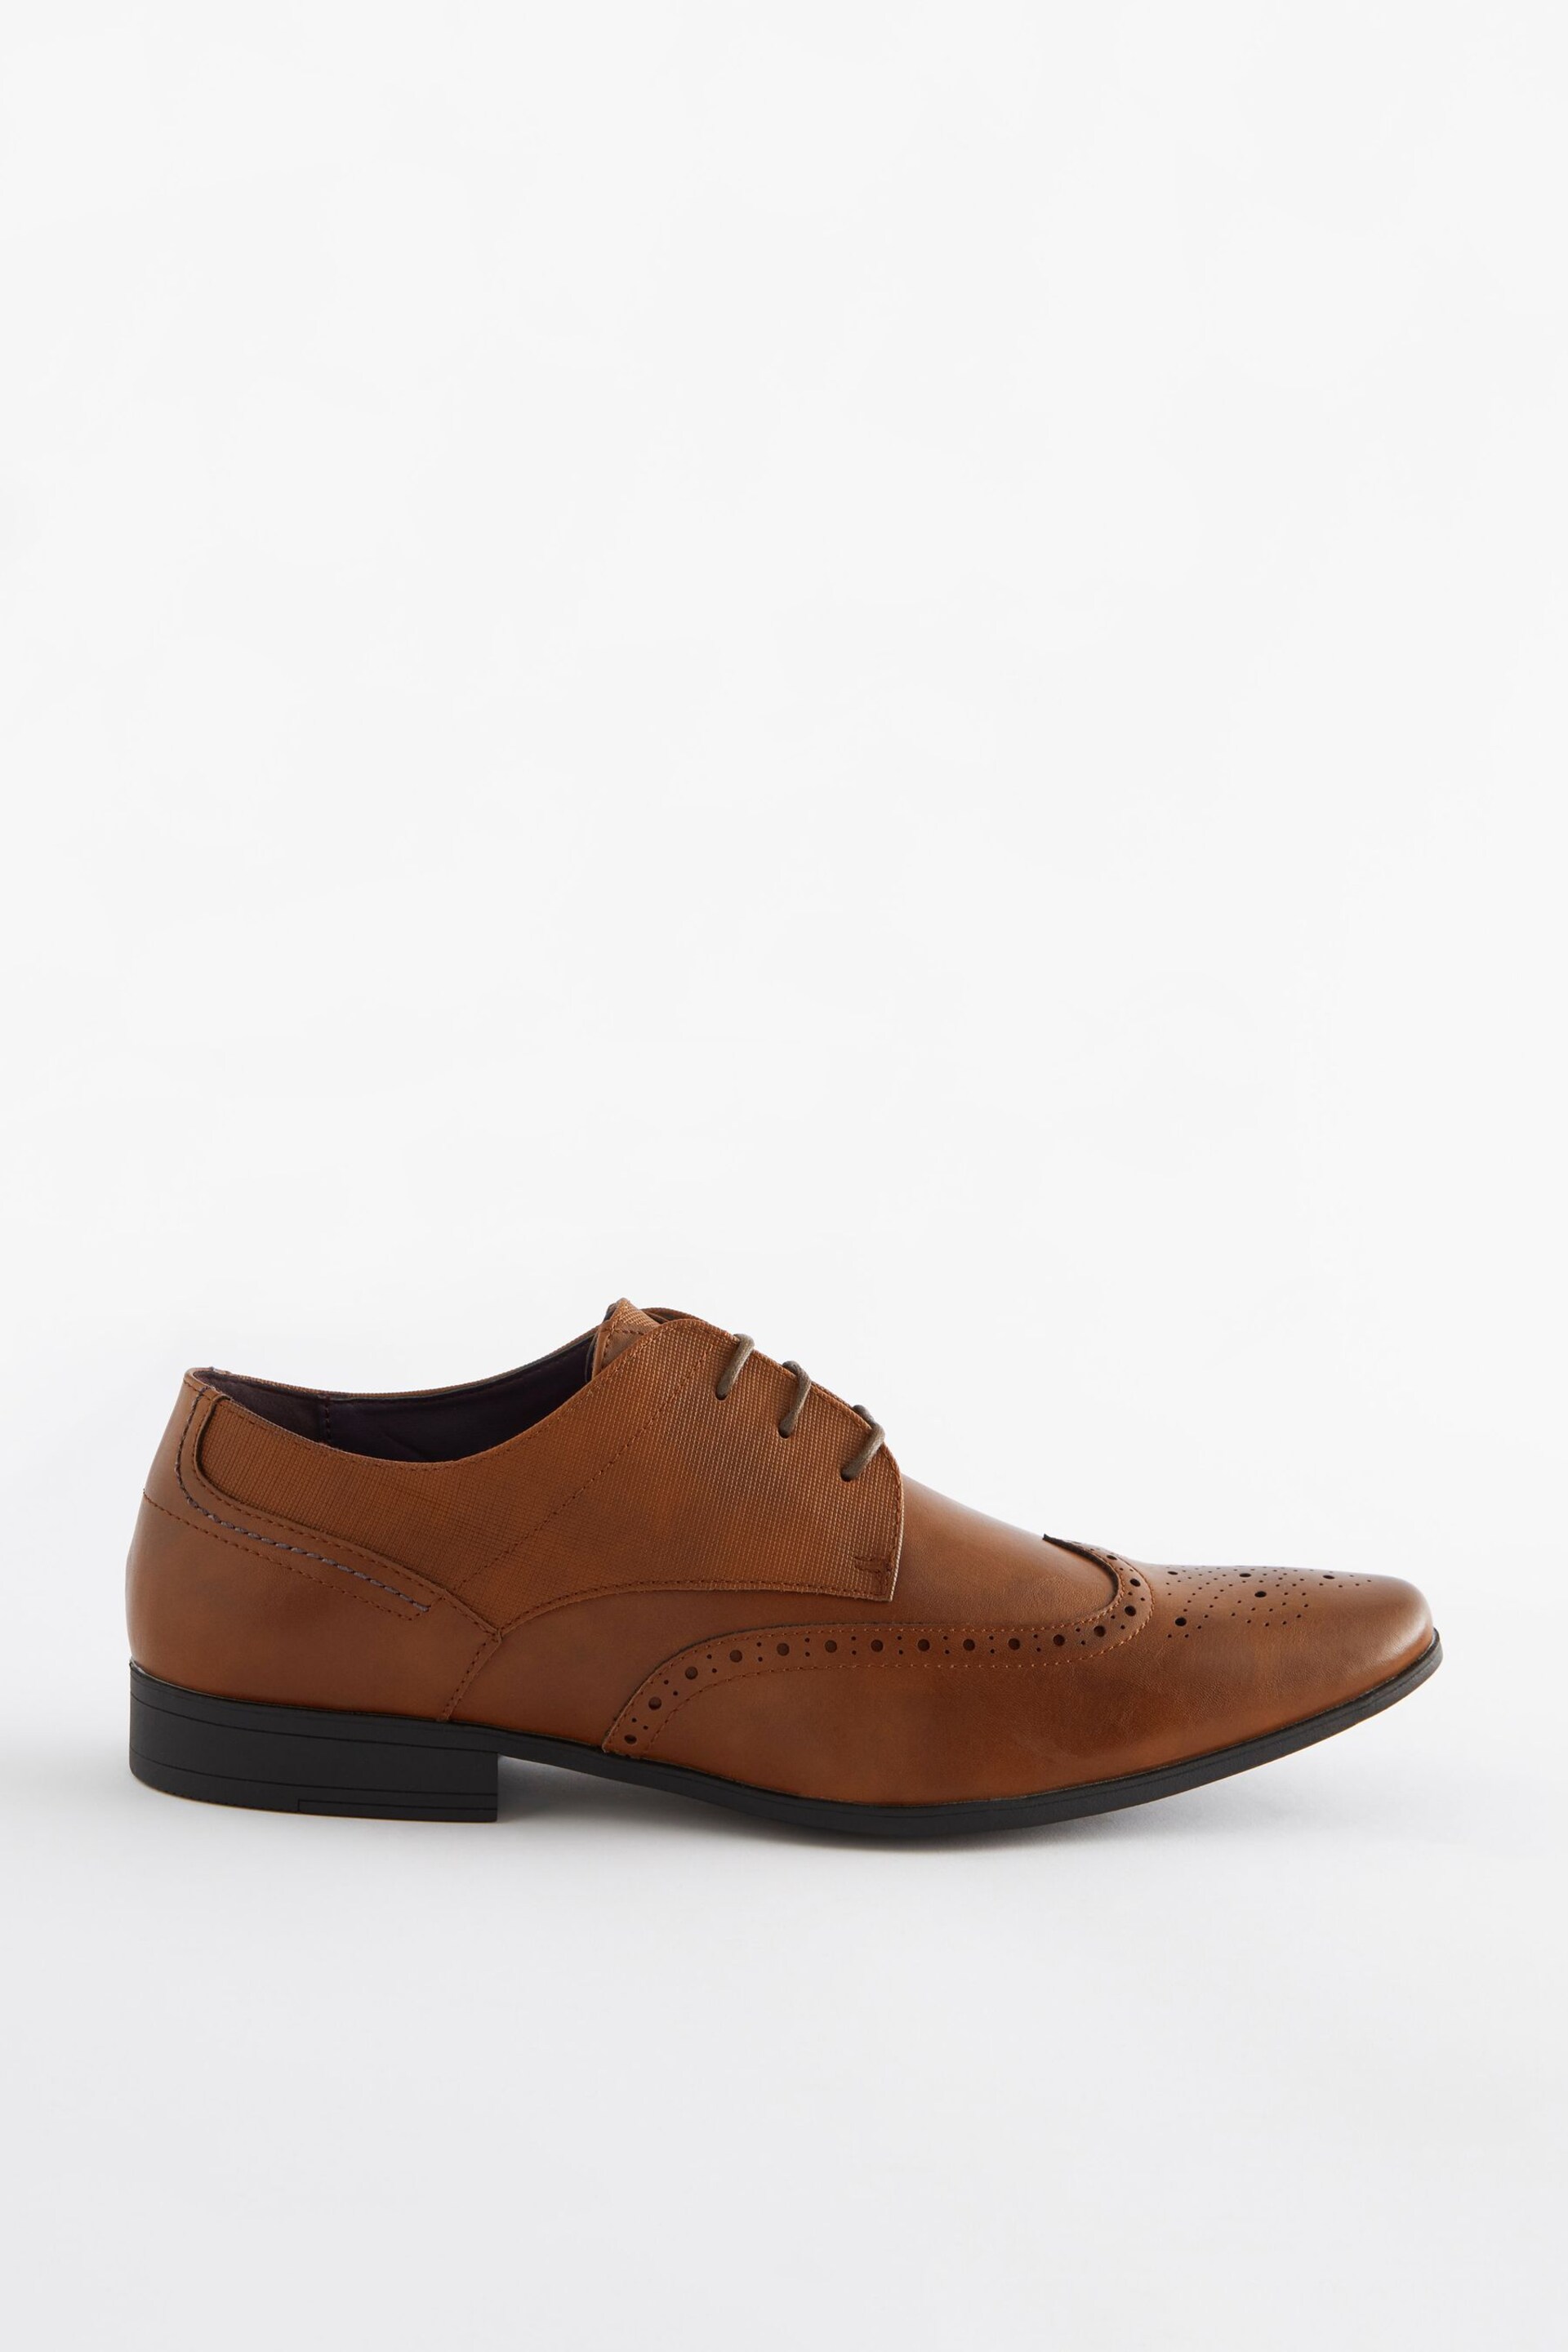 Tan Brown Brogue Shoes - Image 2 of 6